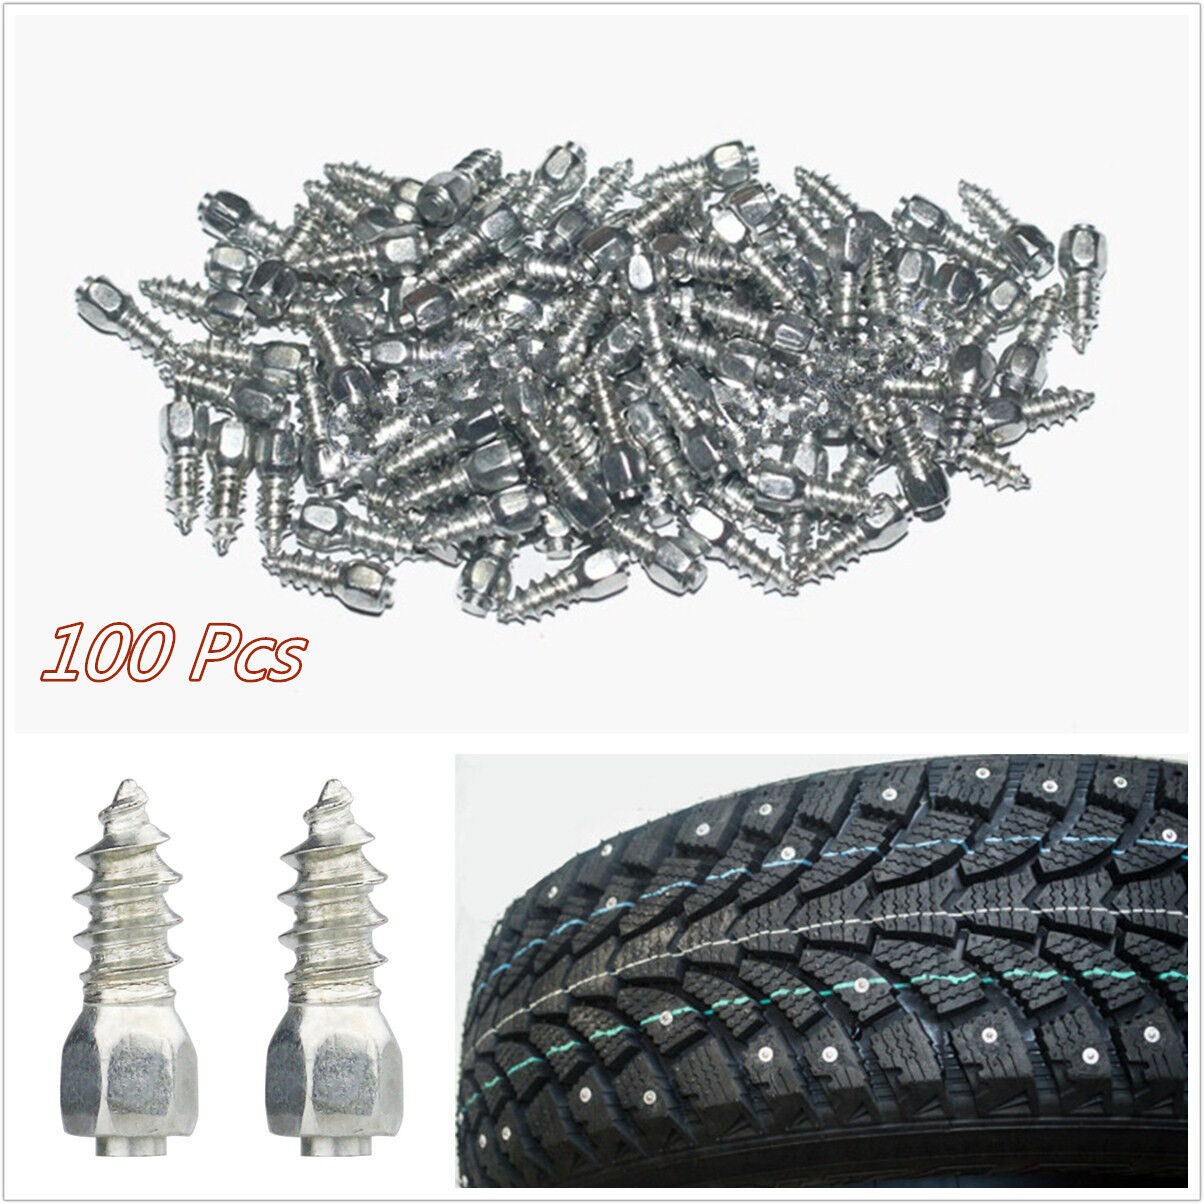 100 Pcs Steel Body + Carbide Tip 12mm Car Wheel Chains Stud Tire Snow Spike